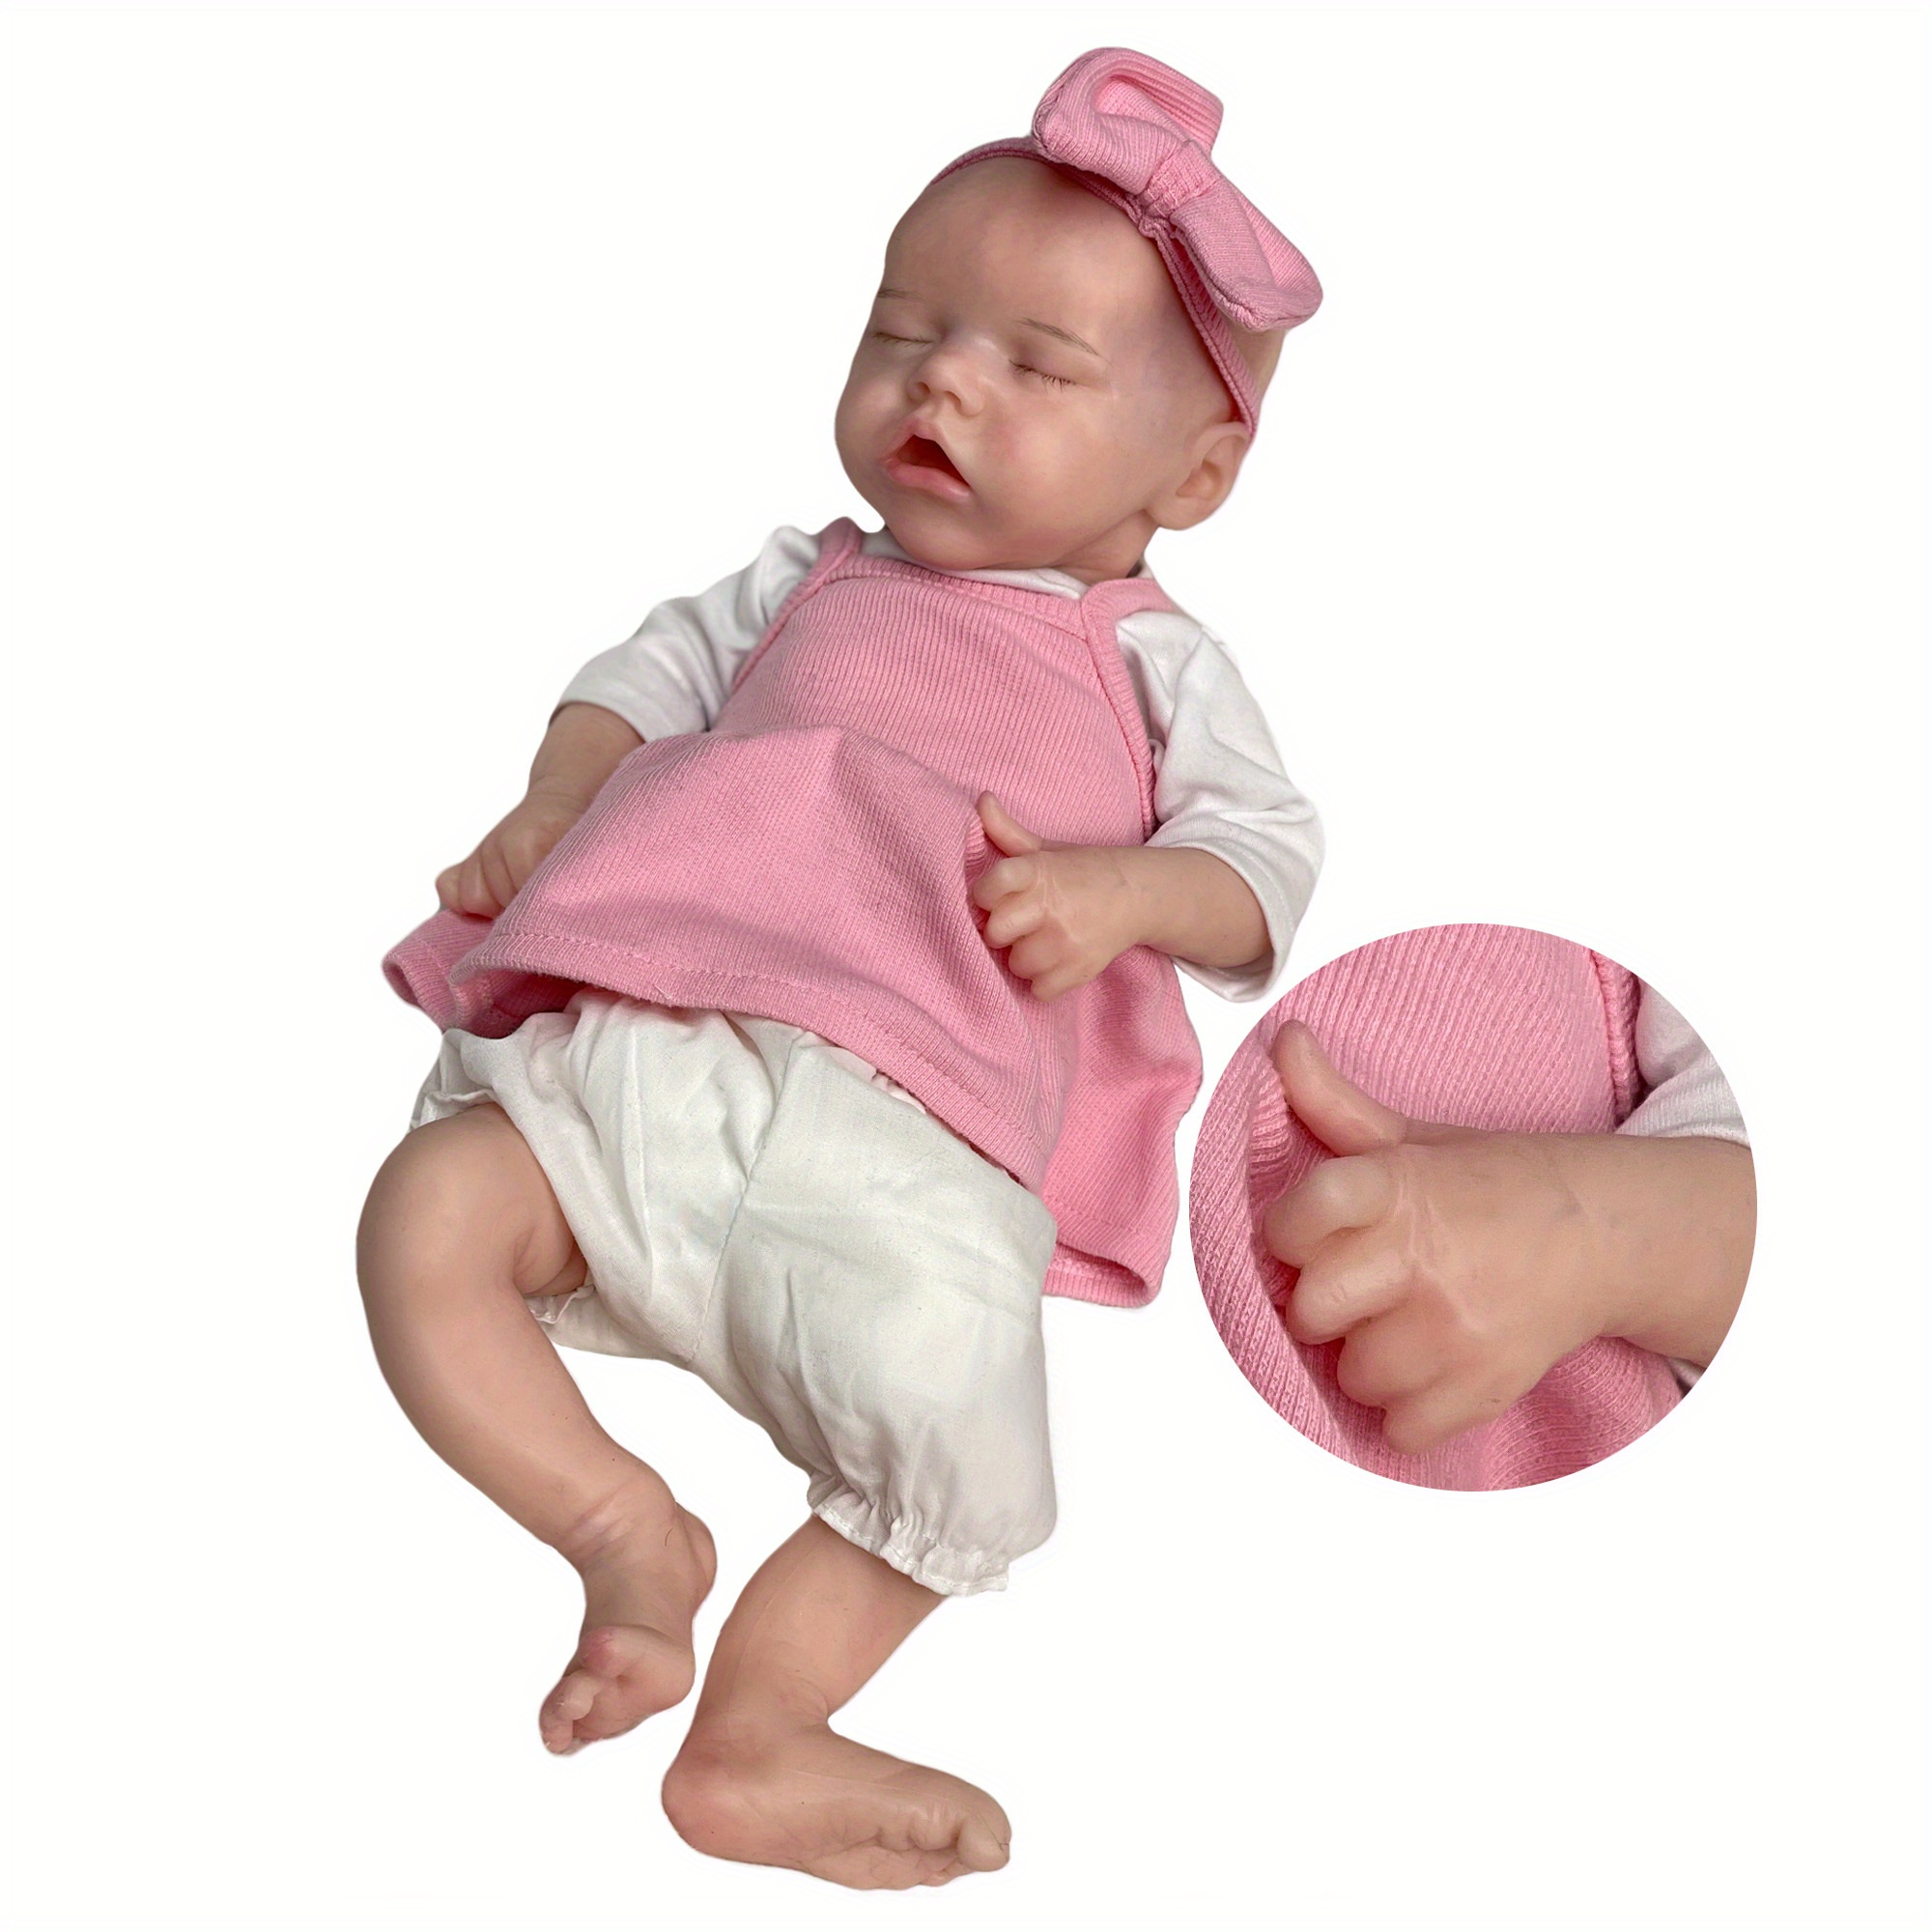 Reborn Baby Dolls, 18 Realistic Newborn Baby Dolls Girl with Soft, reborn 